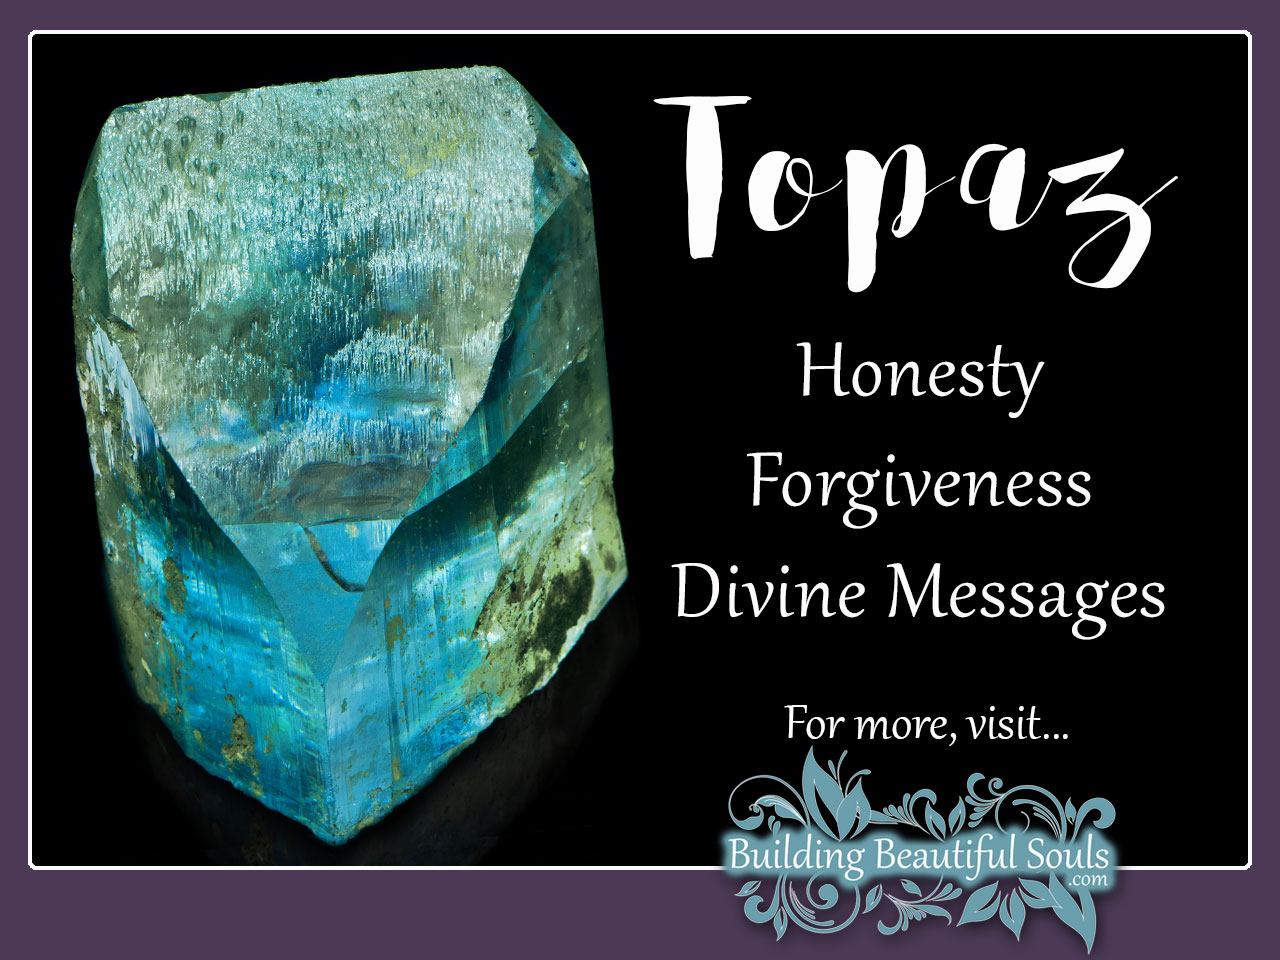 Topaz Meaning & Properties - Healing Crystals & Stones 1280x960